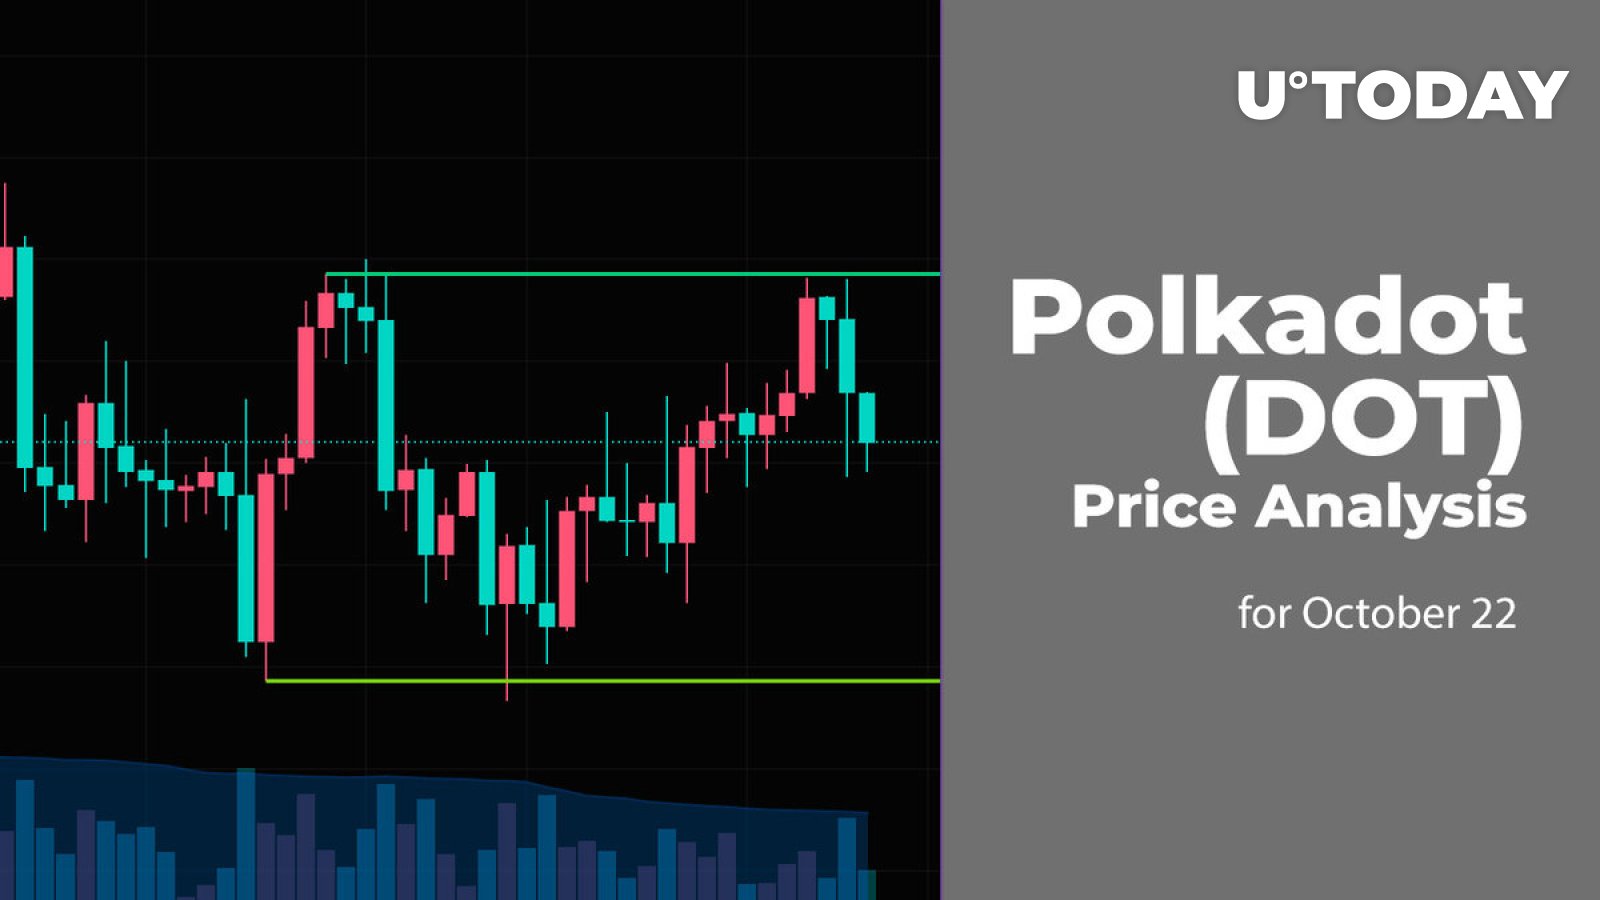 Polkadot (DOT) Price Analysis for October 22